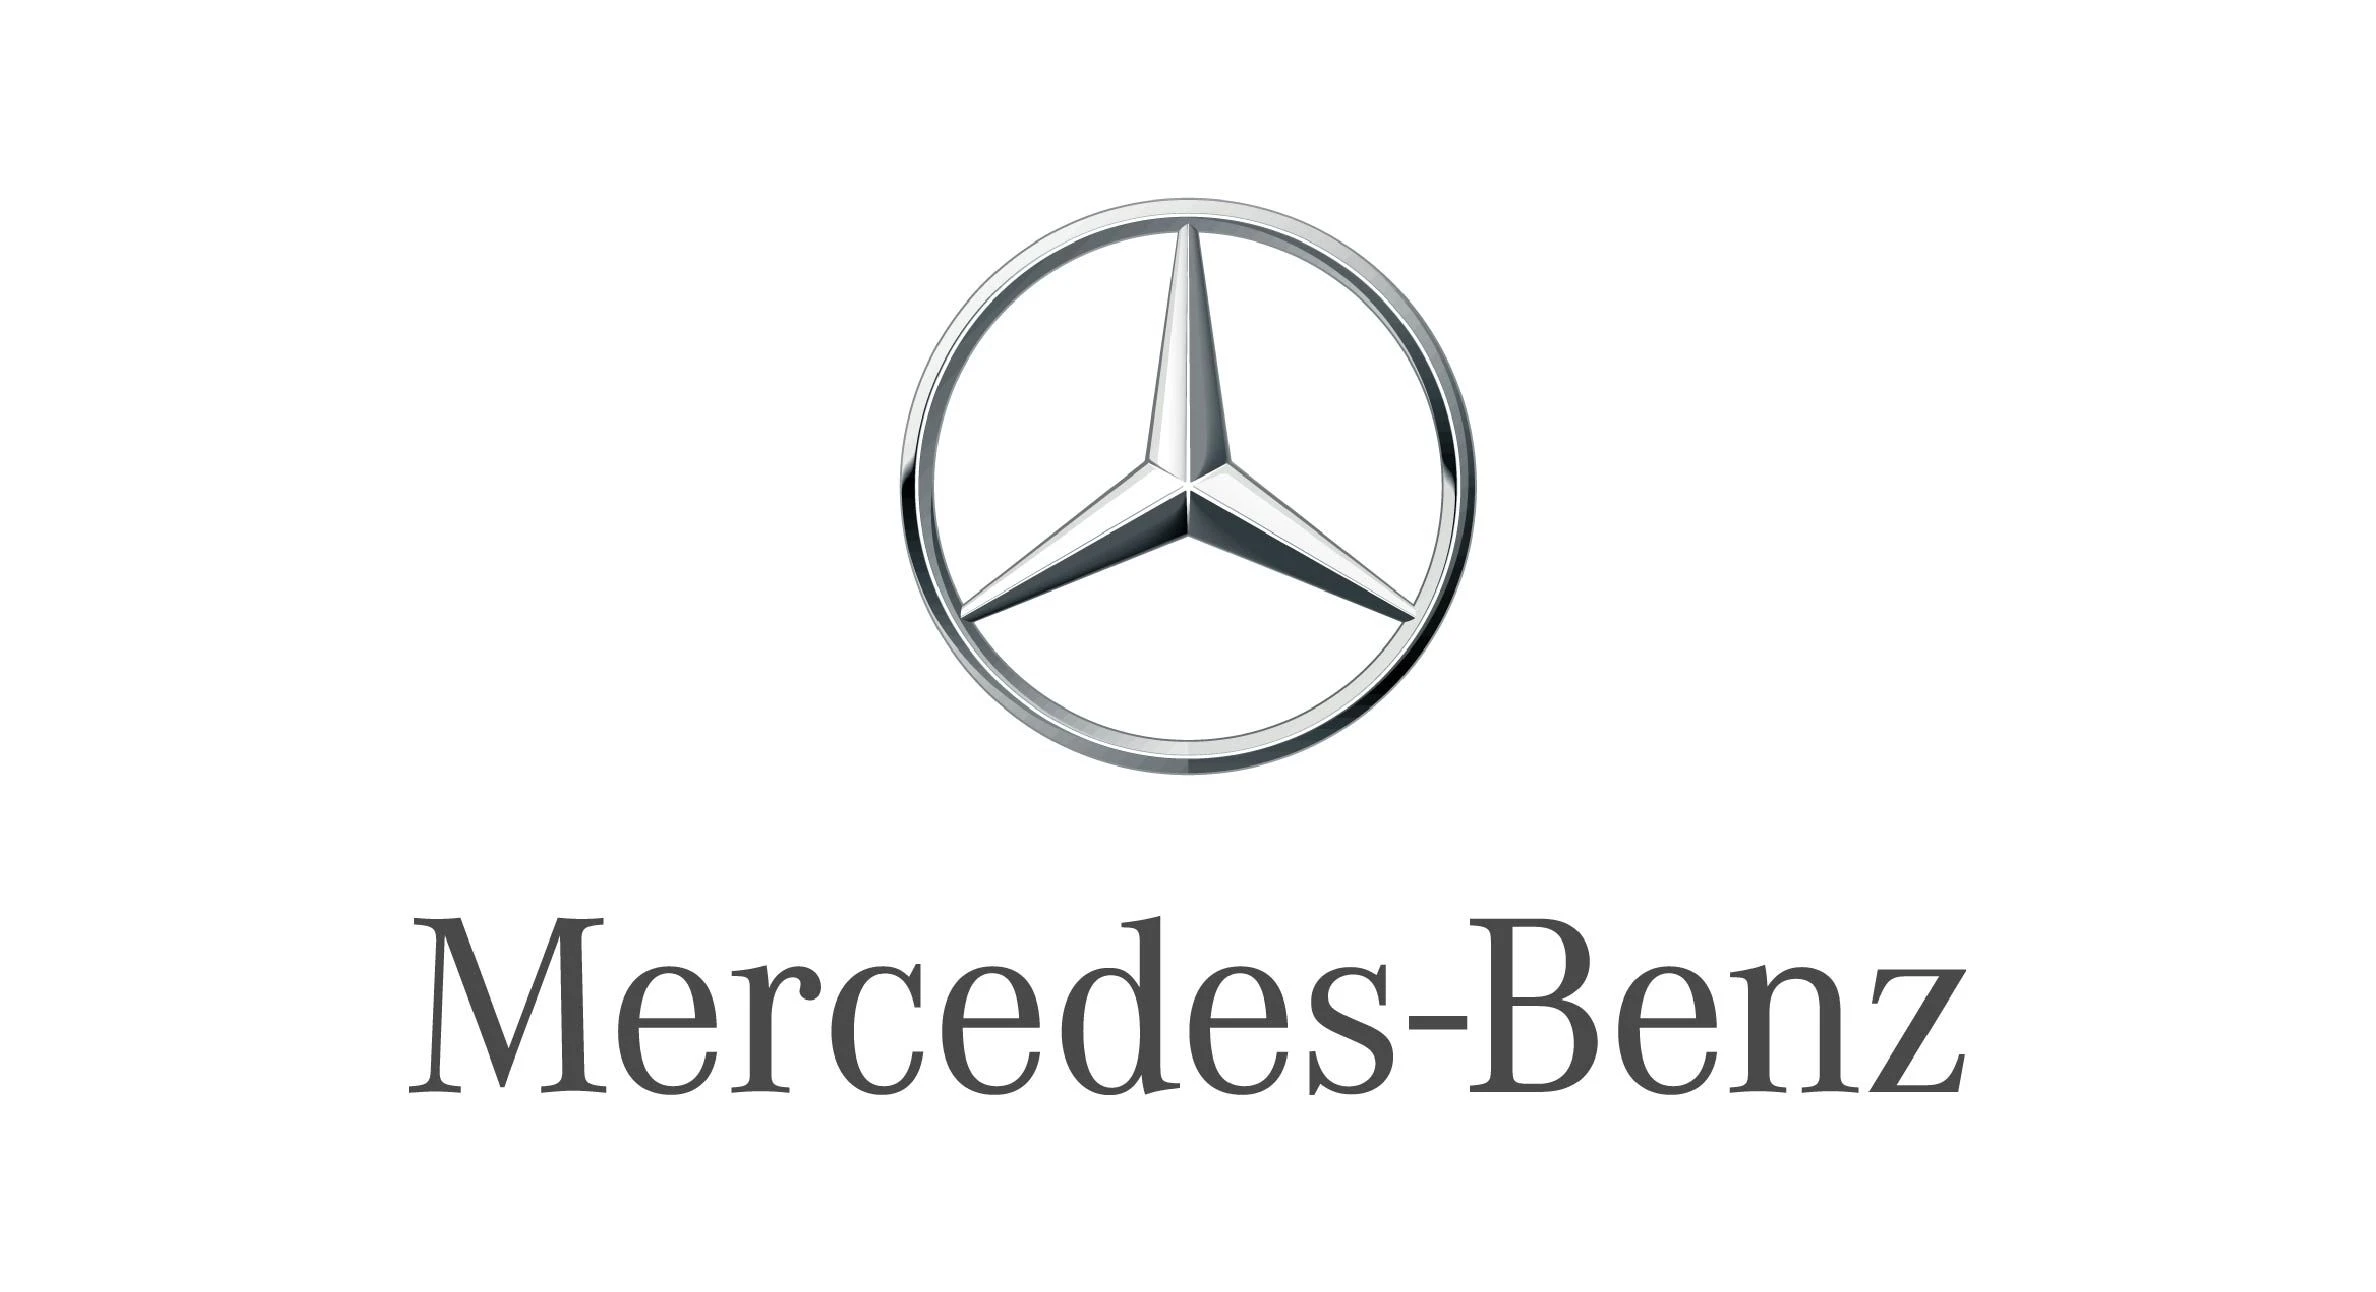 Mercedes car brand logo